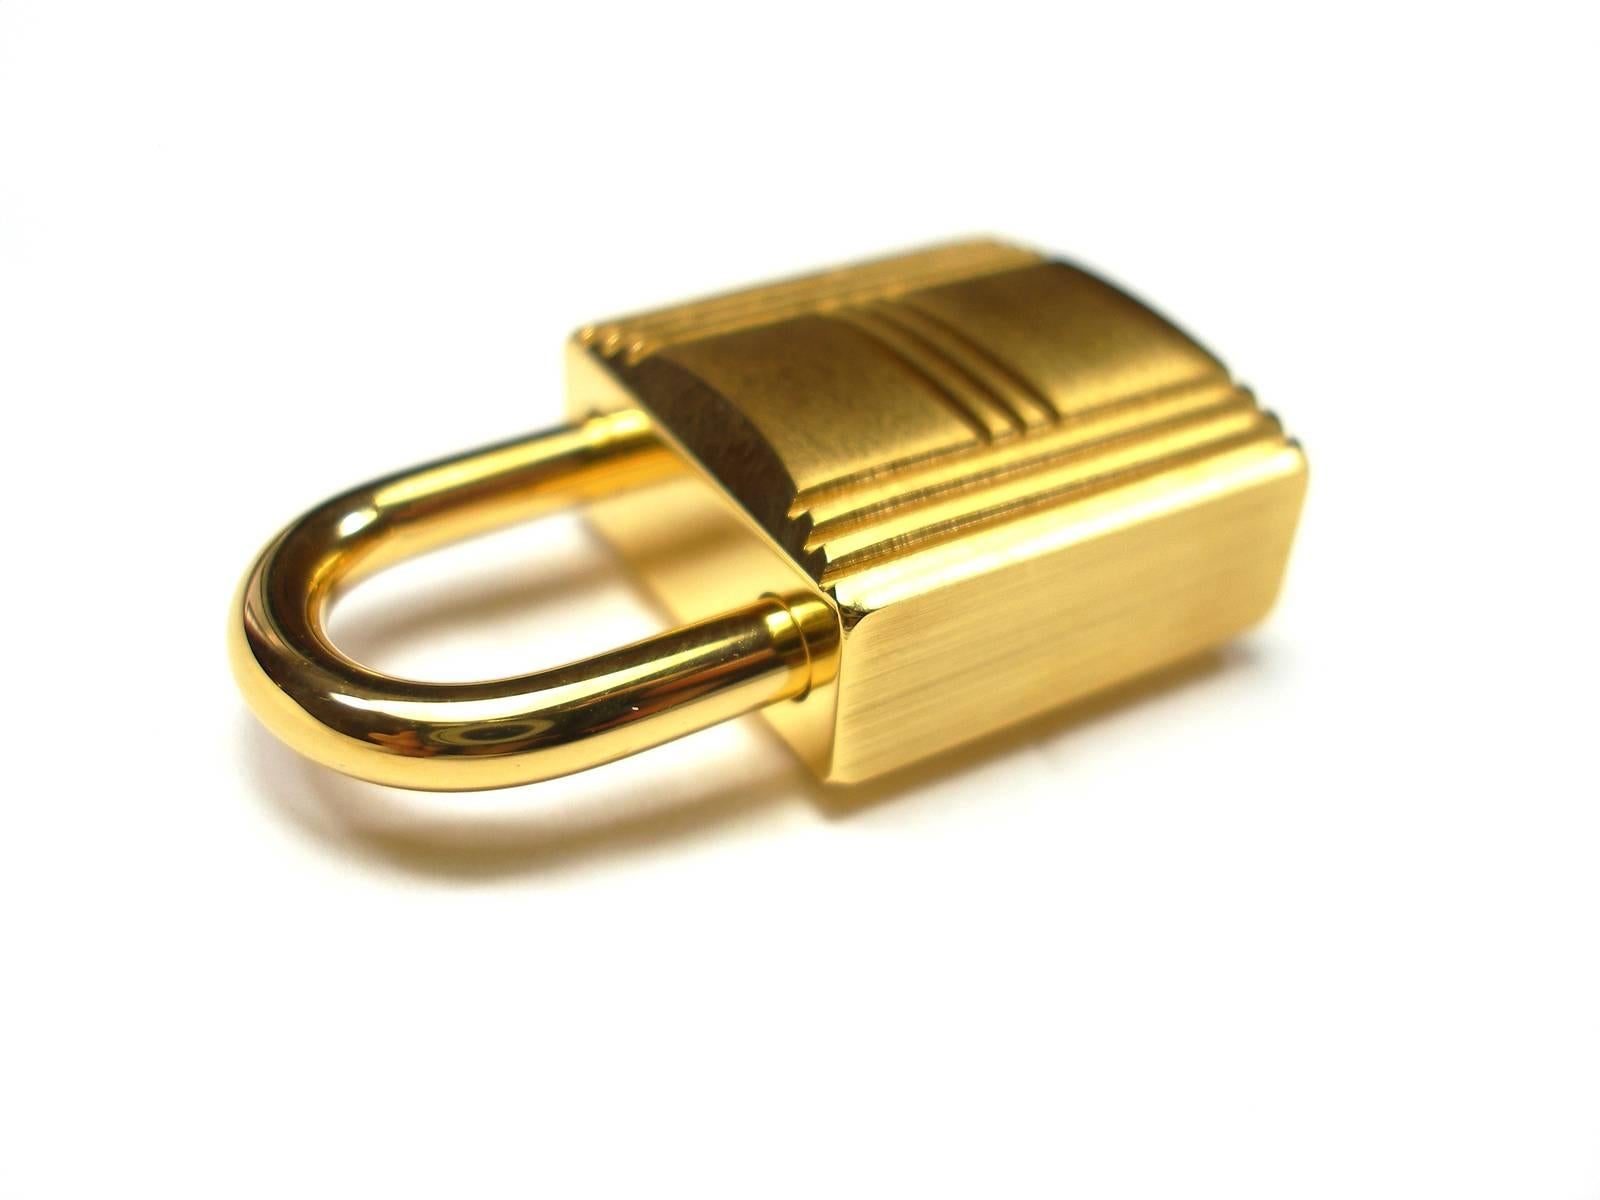 Hermès Cadenas Lock 2 Keys For Birkin or Kelly bag Gold plated shiny and brushed 2